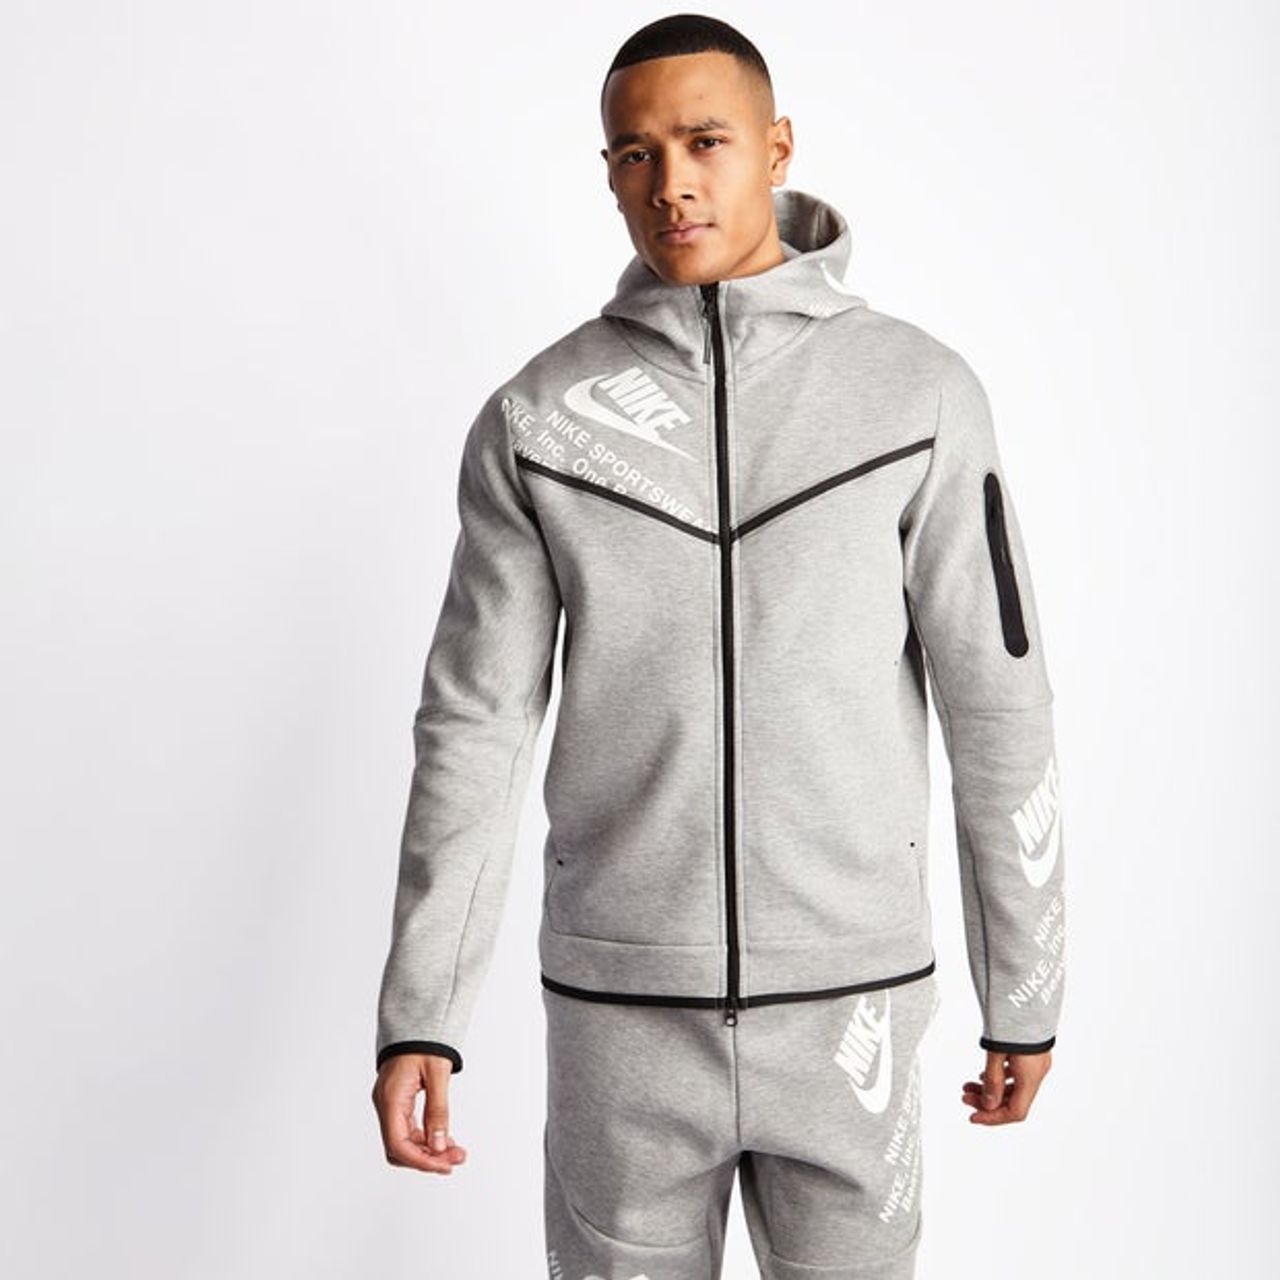 Nike Tech Fleece Gpx Full-zip Hoody - Men Hoodies DM6474-063 - Compare ...